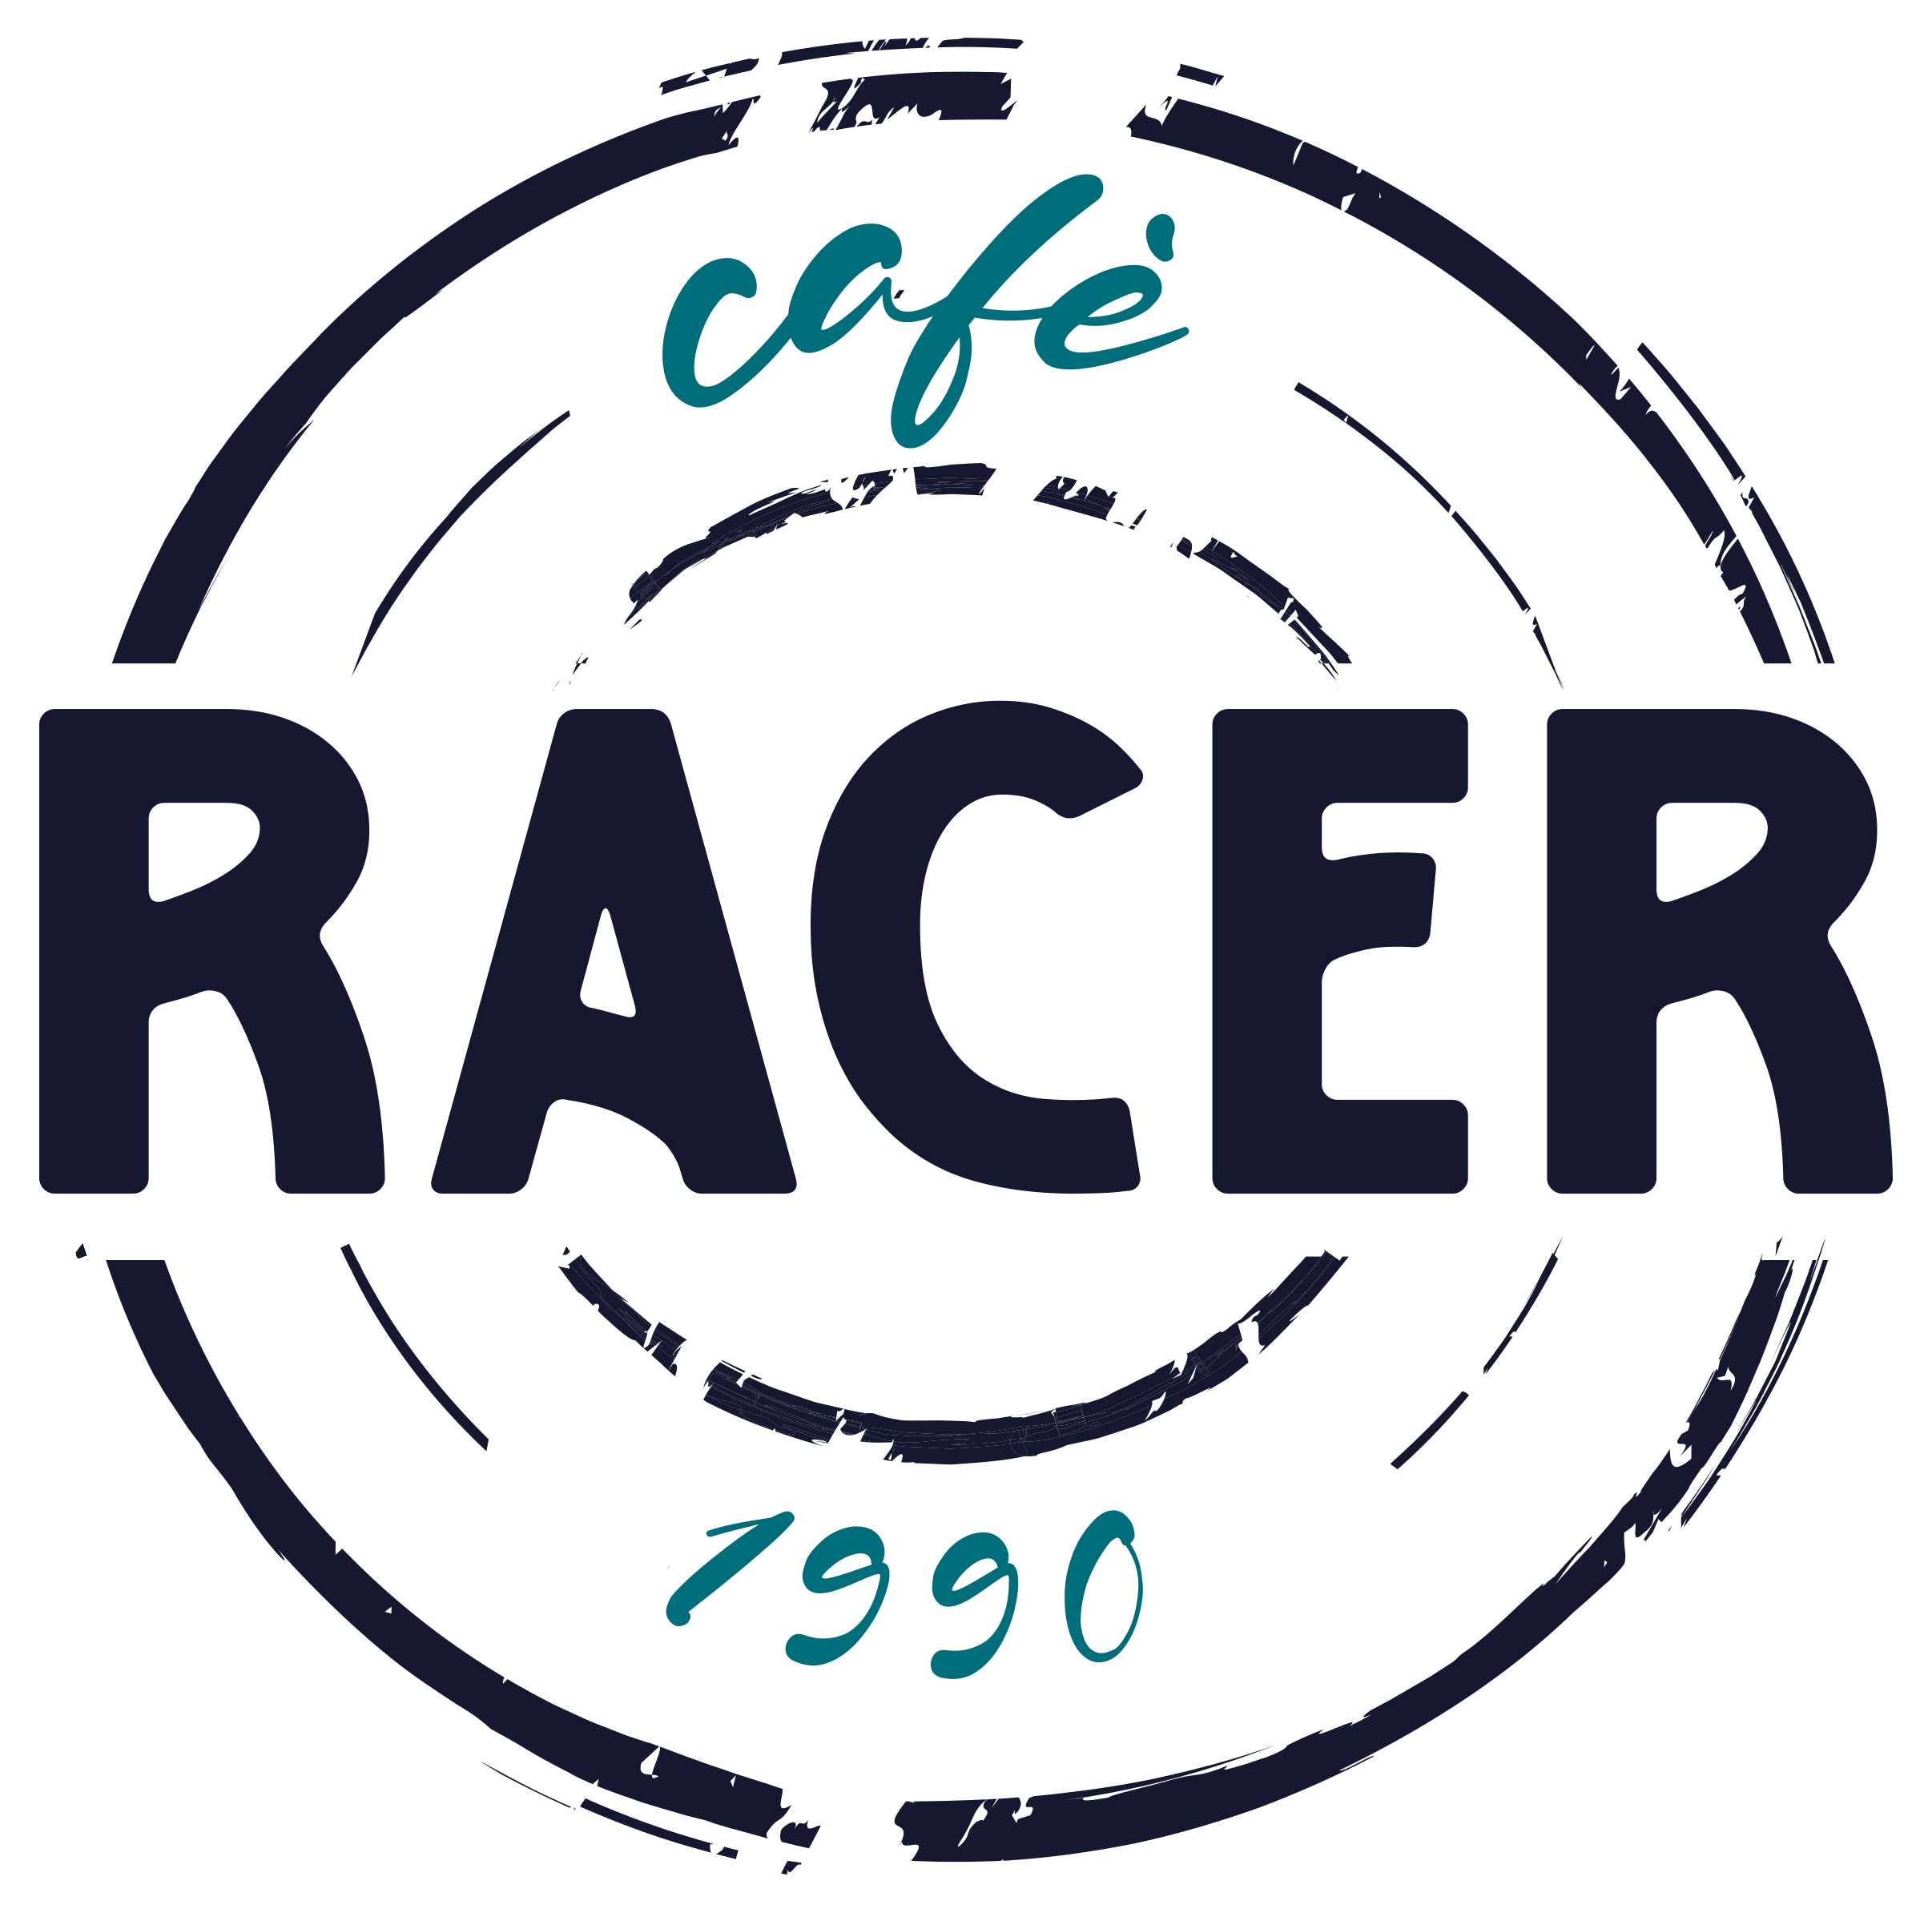 Cafè Racer 1990